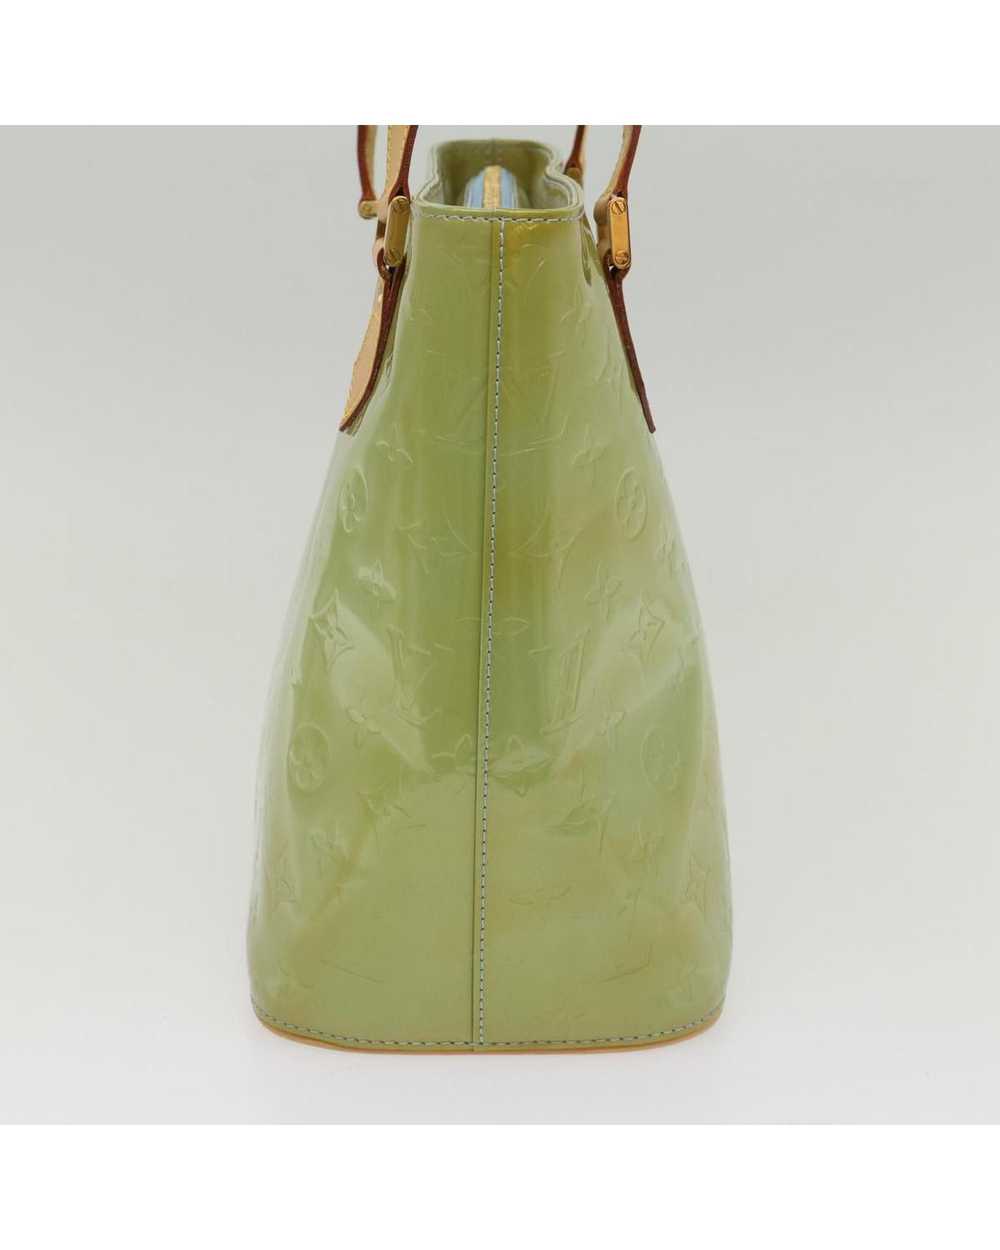 Louis Vuitton Green Patent Leather Handbag - image 5